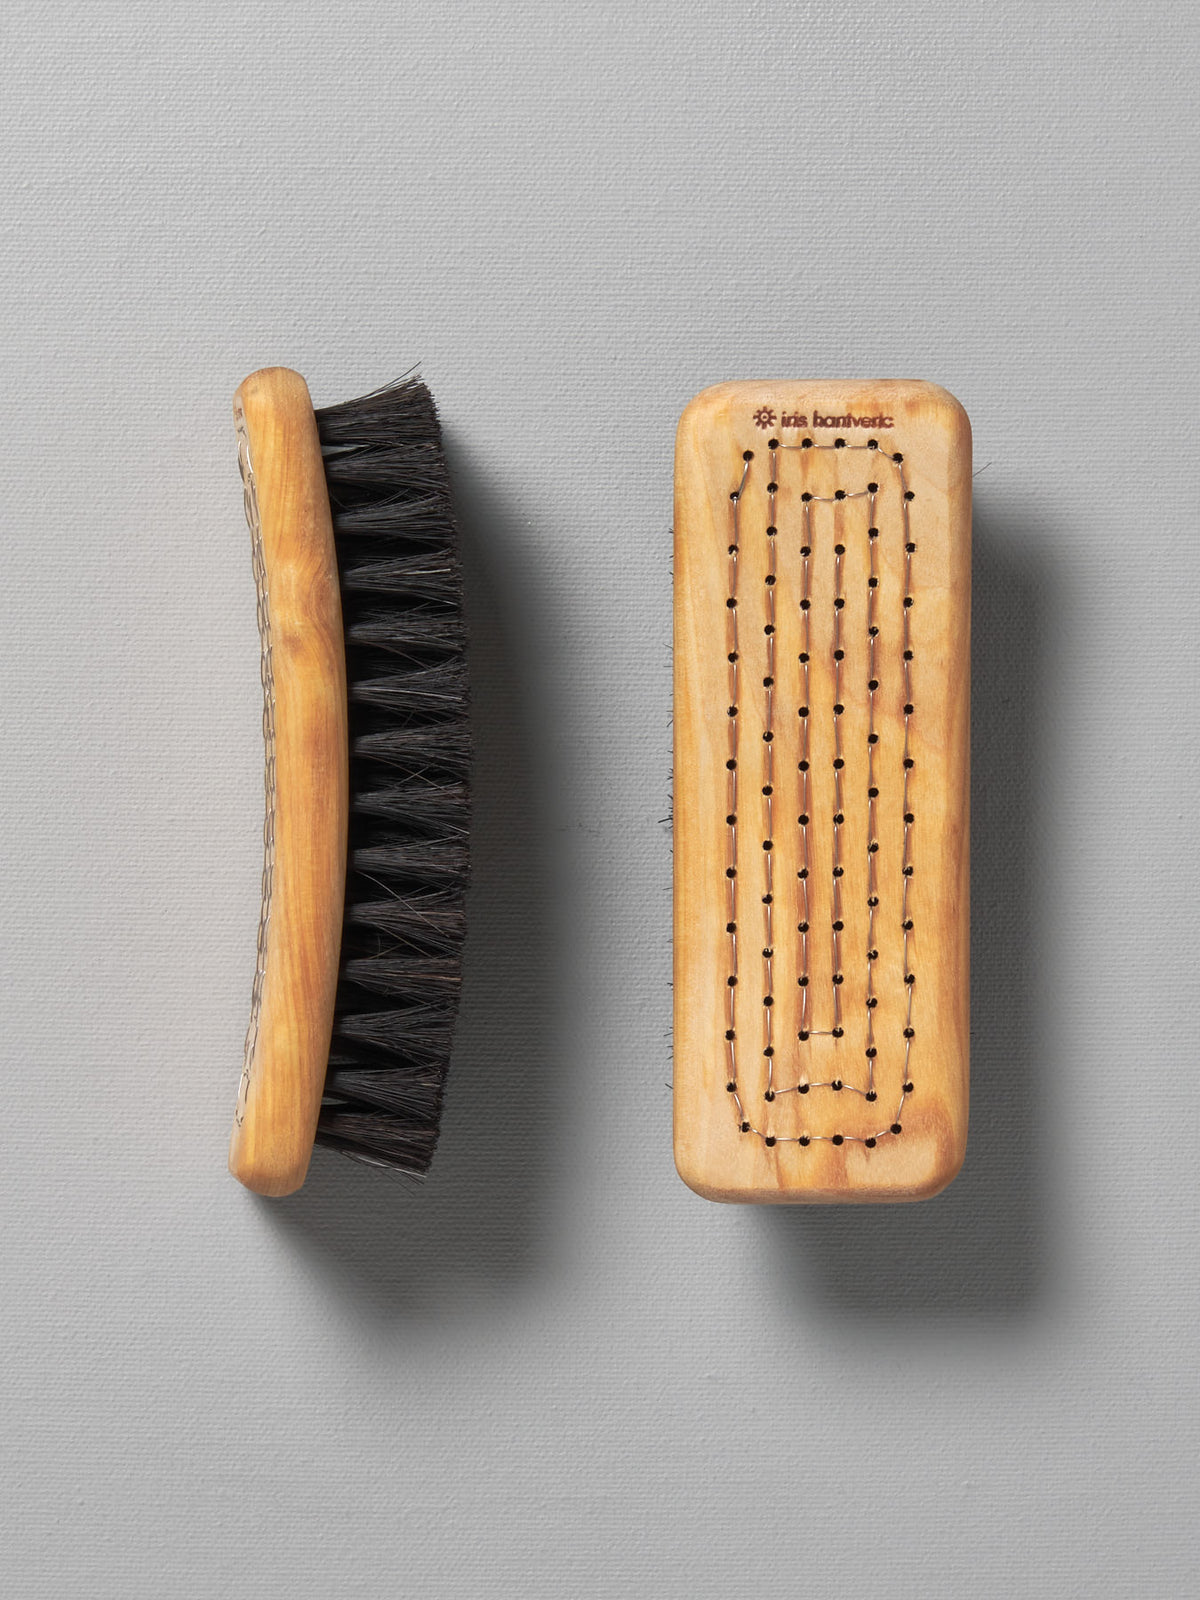 A pair of Iris Hantverk shoe brushes on a grey surface.